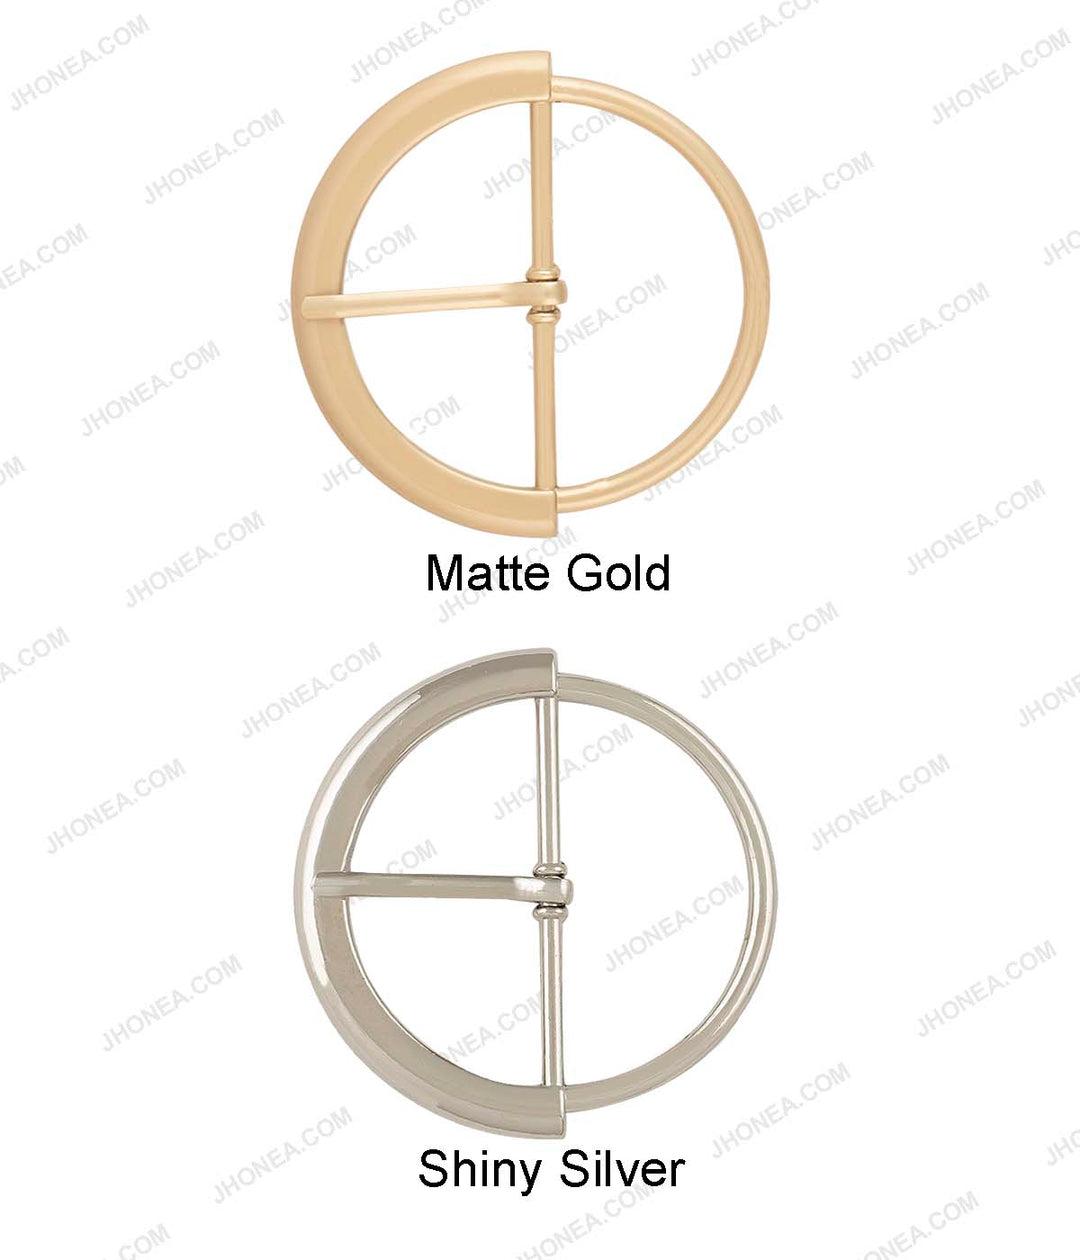 Glossy Matte Gold & Shiny Chrome Silver Center Bar Prong Belt Buckle